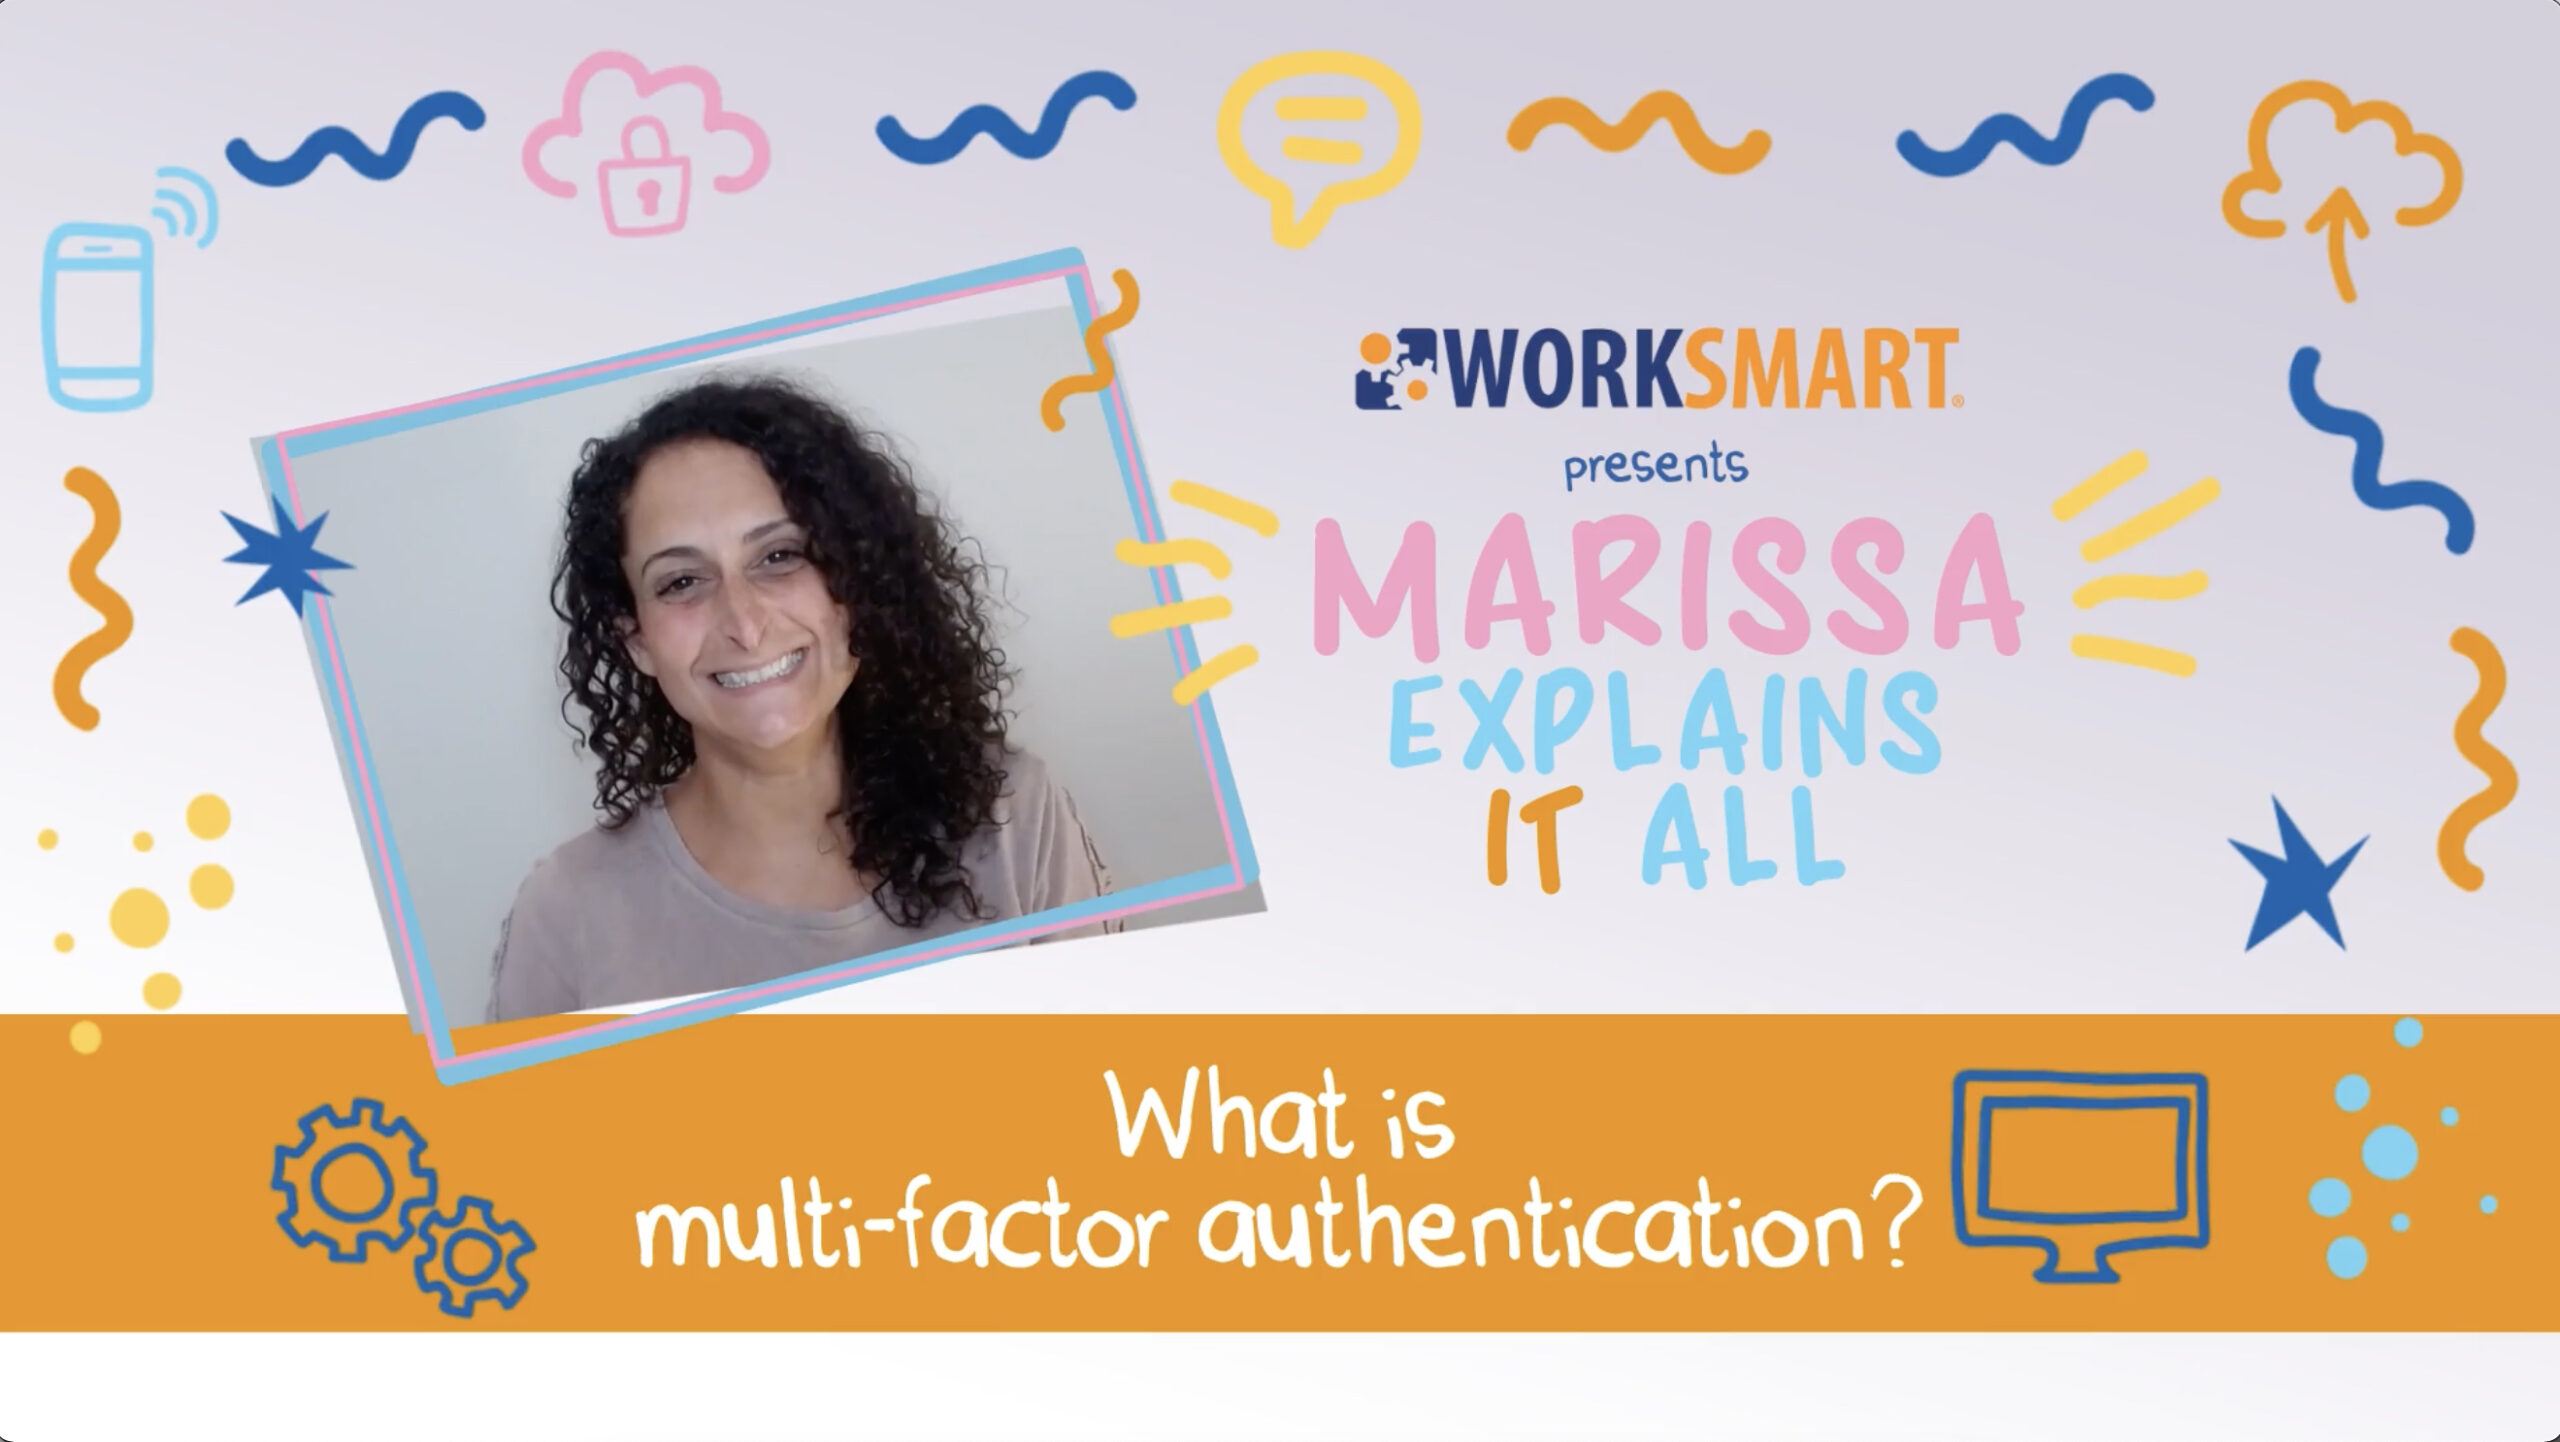 Marissa Explains IT All: What is multi-factor authentication?